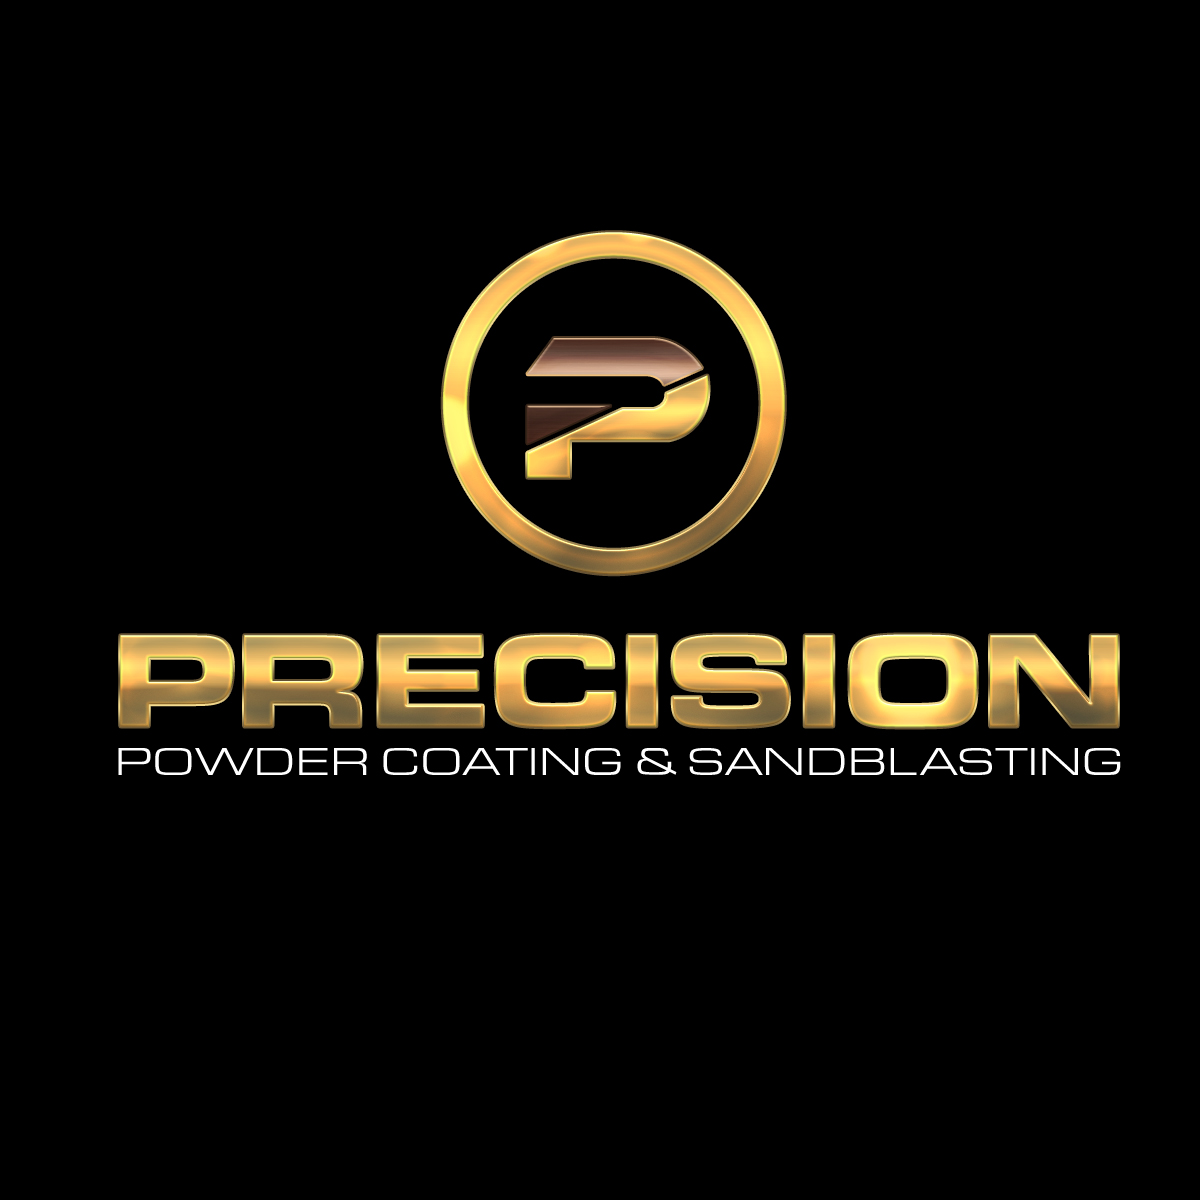 powder coating logo ideas 1